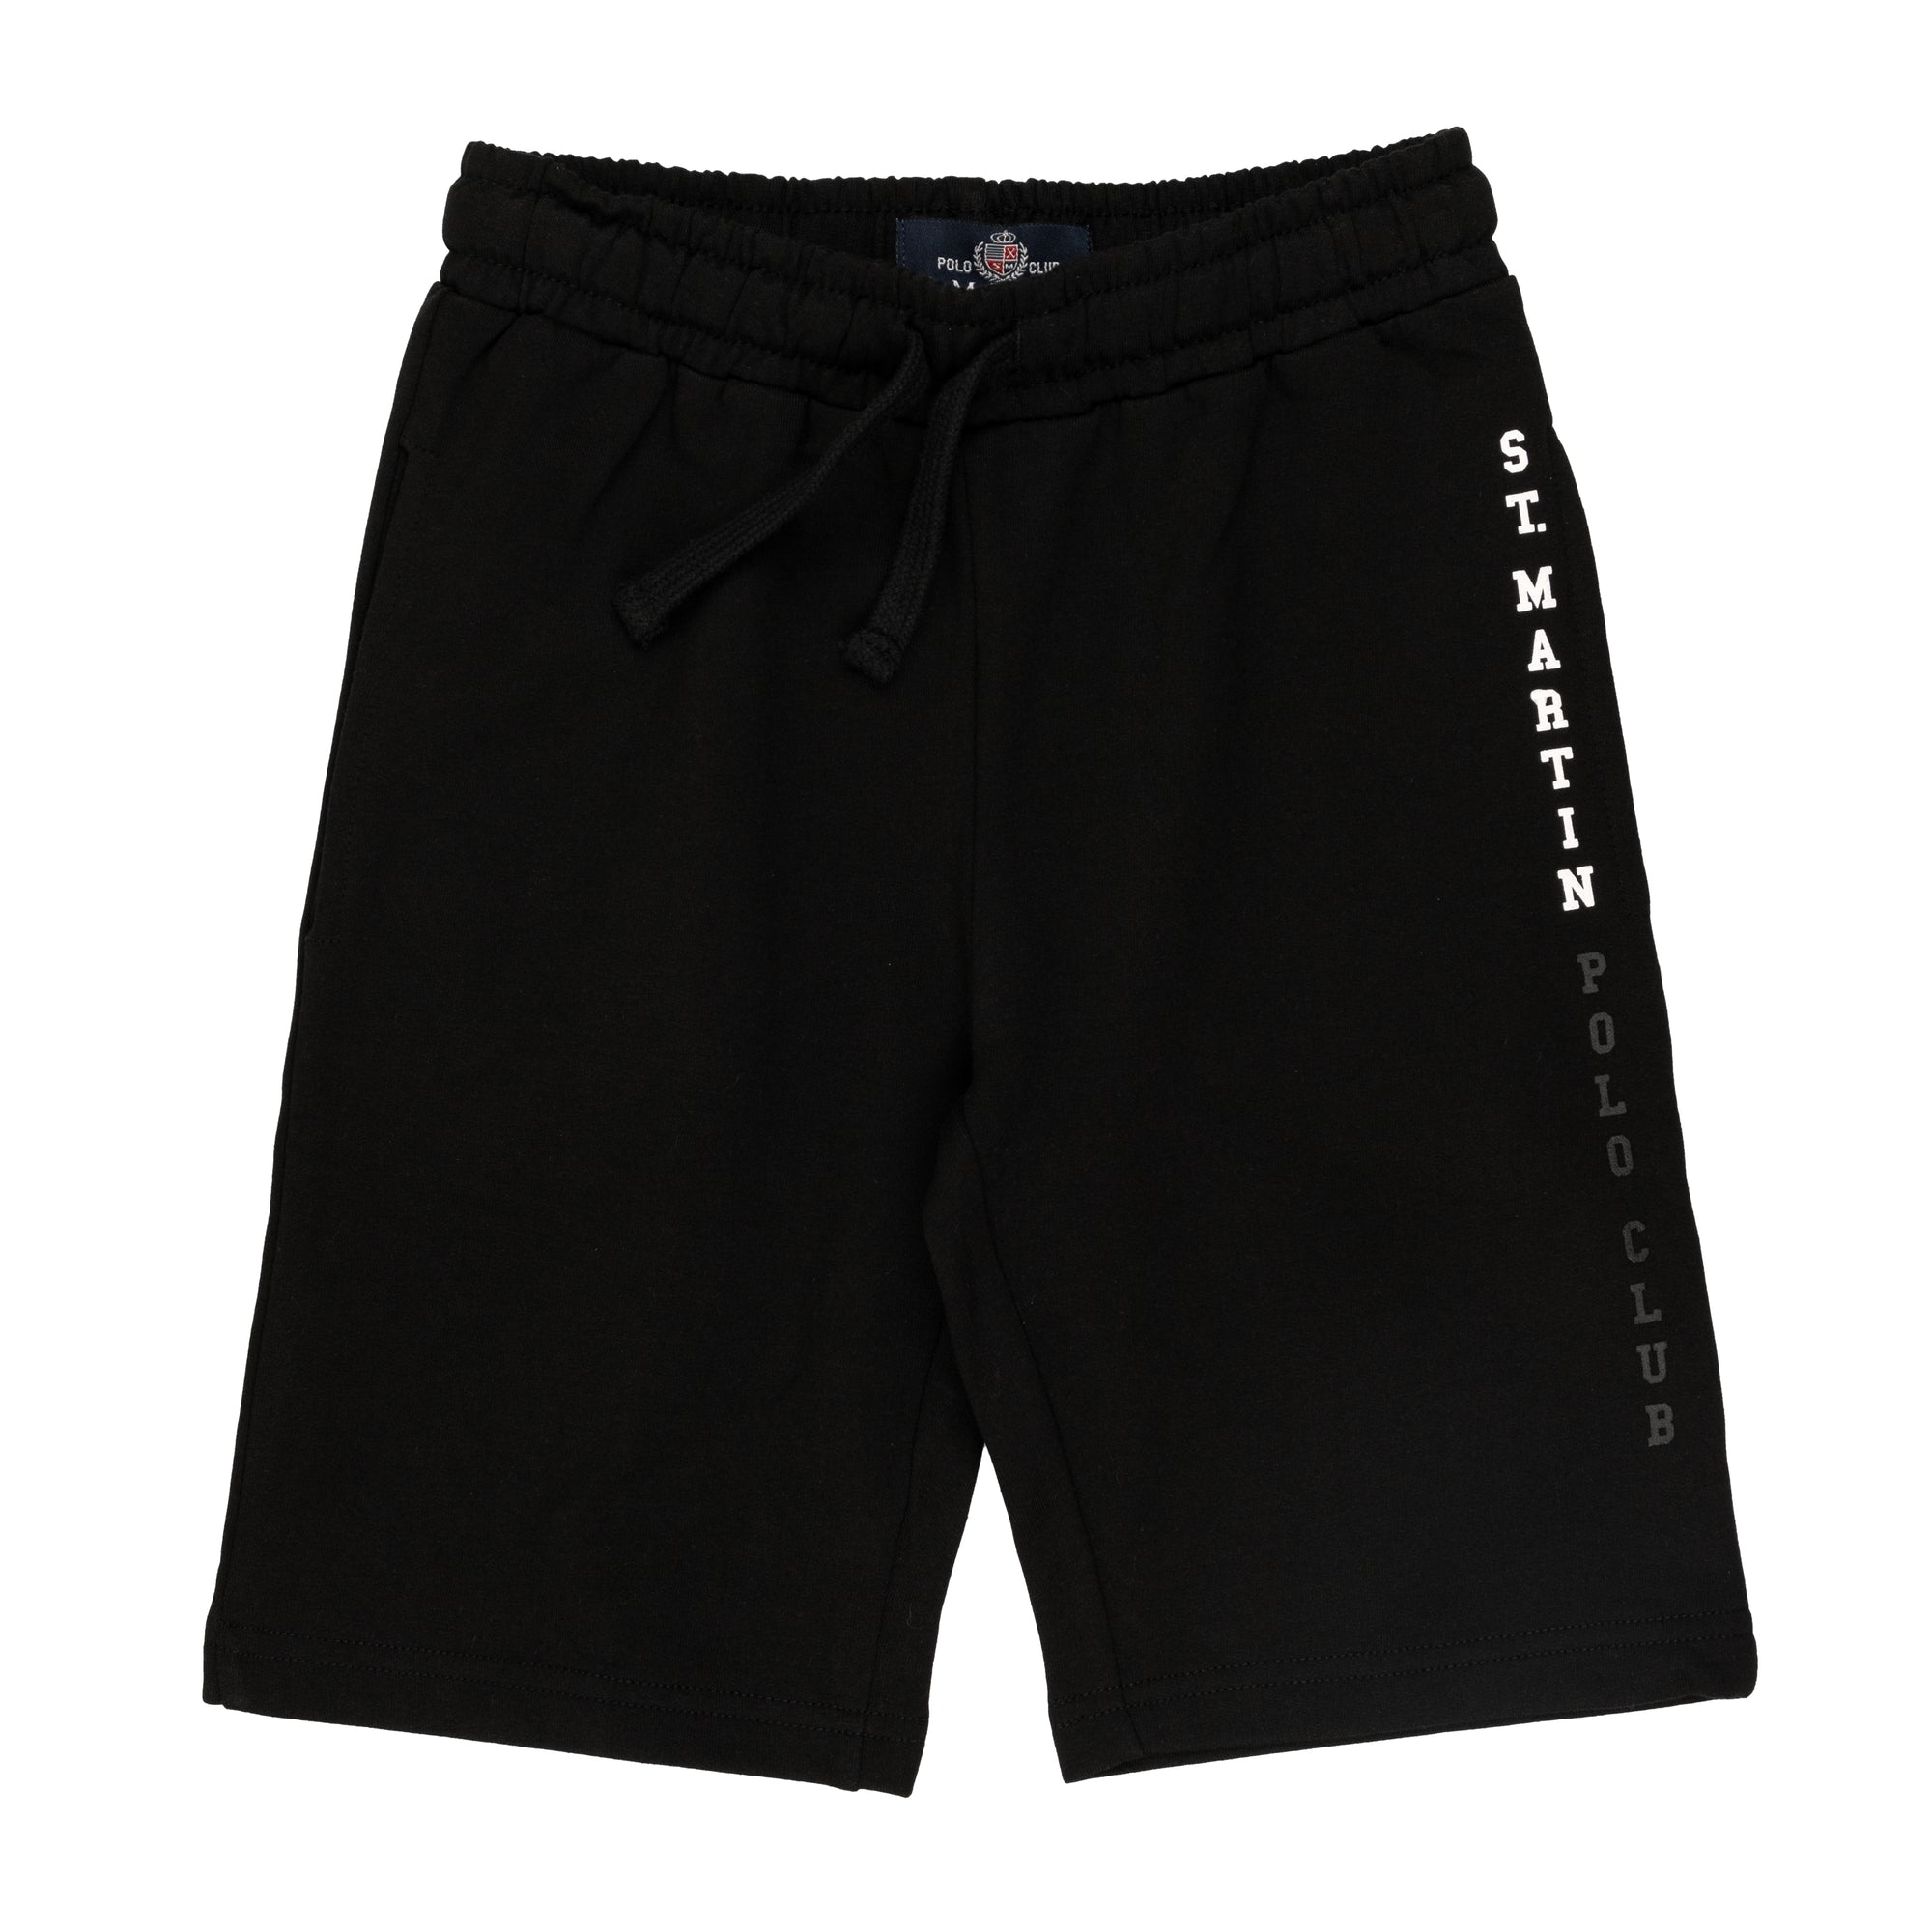 Bermuda shorts with inside brushed logo print